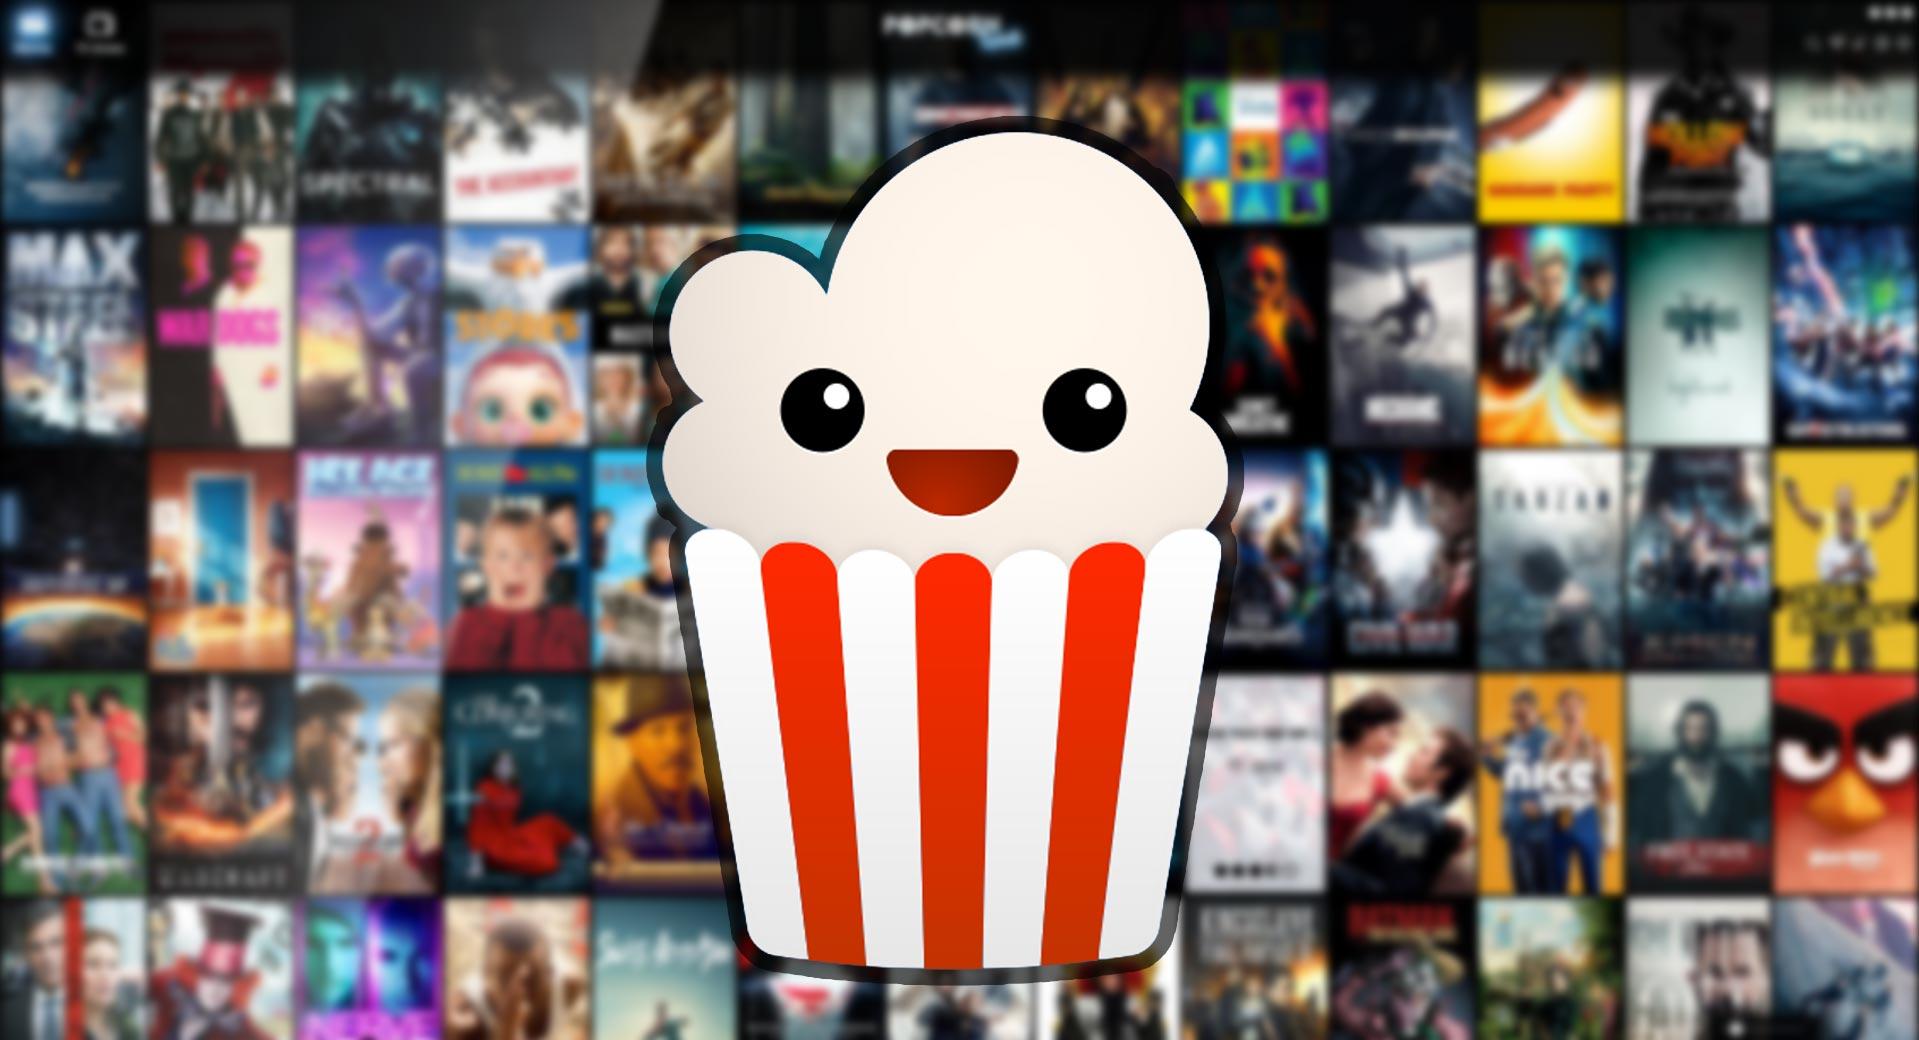 popcorn-time-logo